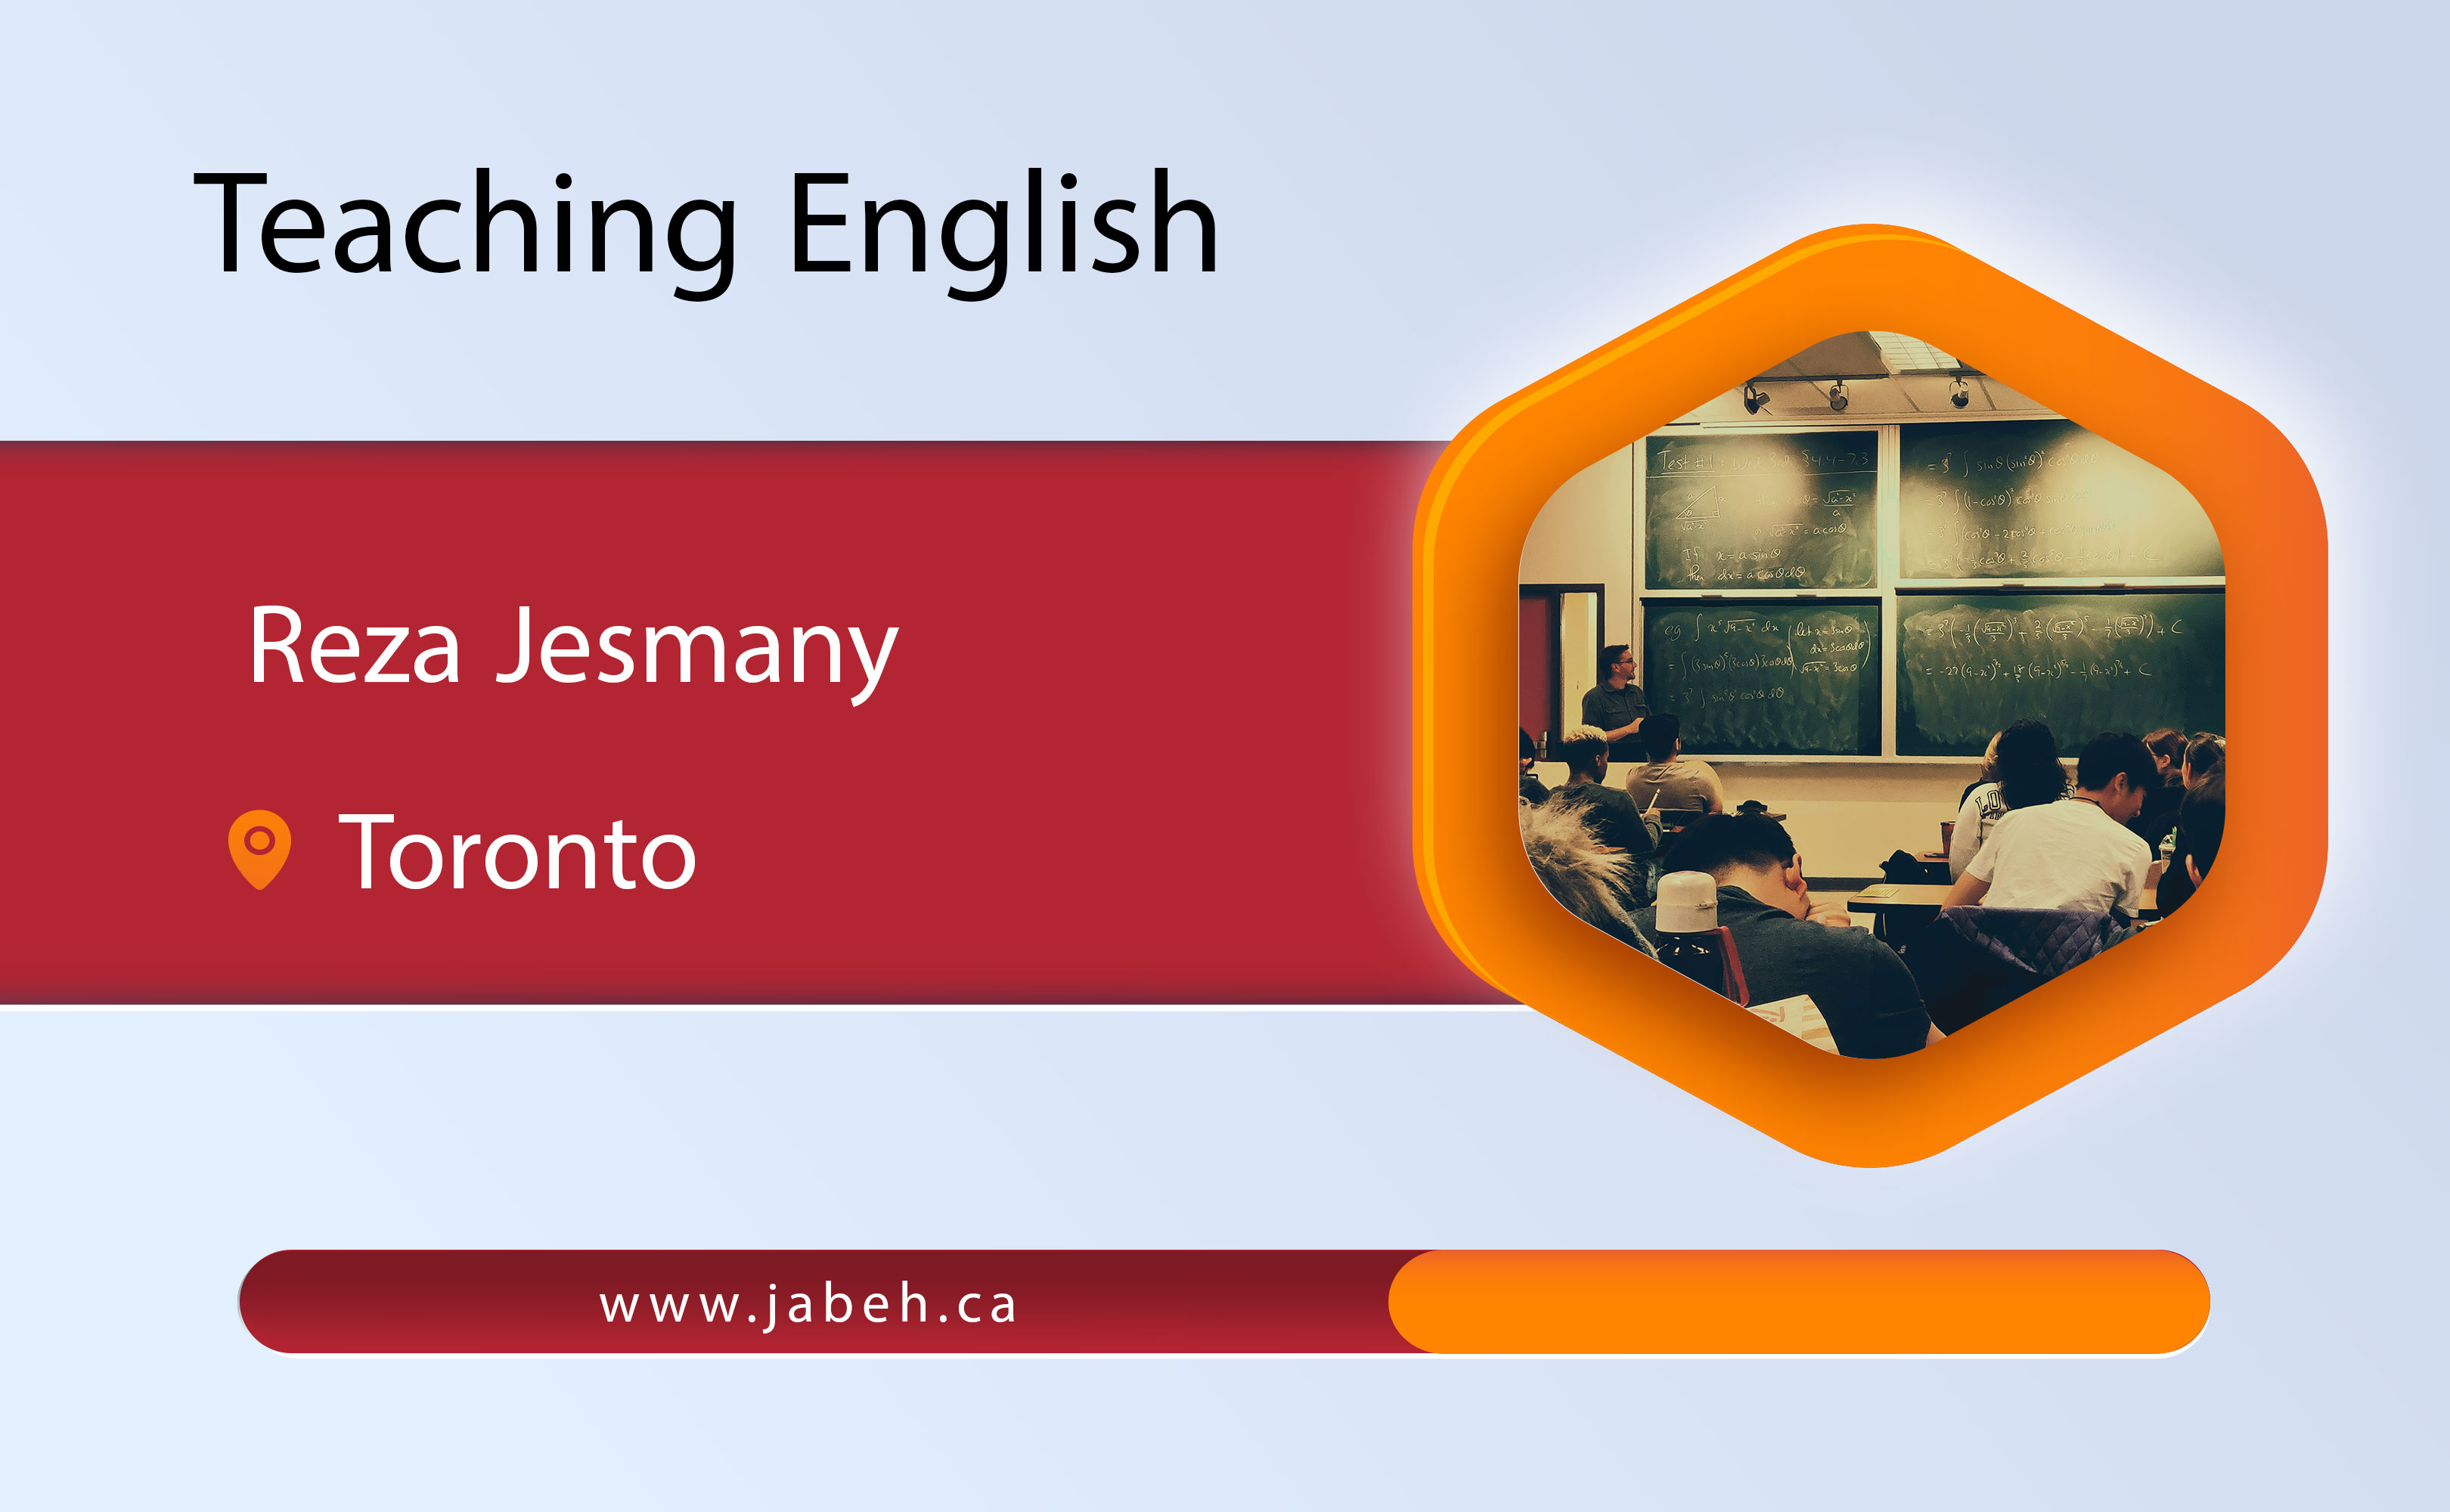 Teaching English by Reza Khasami in Toronto